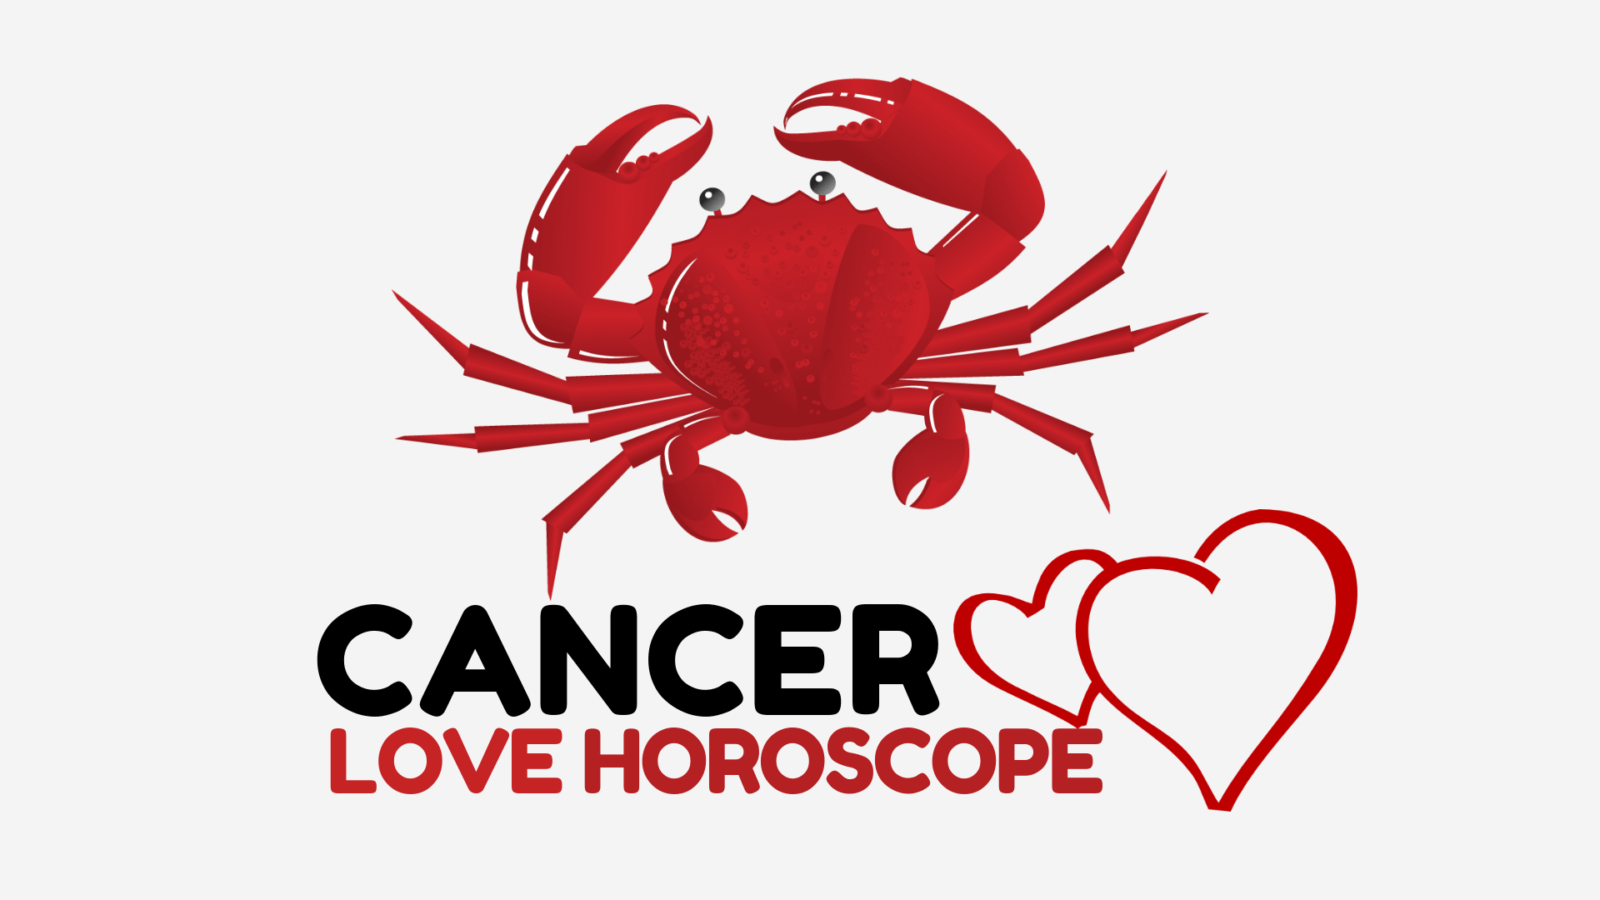 Cancer Horoscope. I Love Cancer. Biggest Love Horoscope. Прогноз на неделю рак